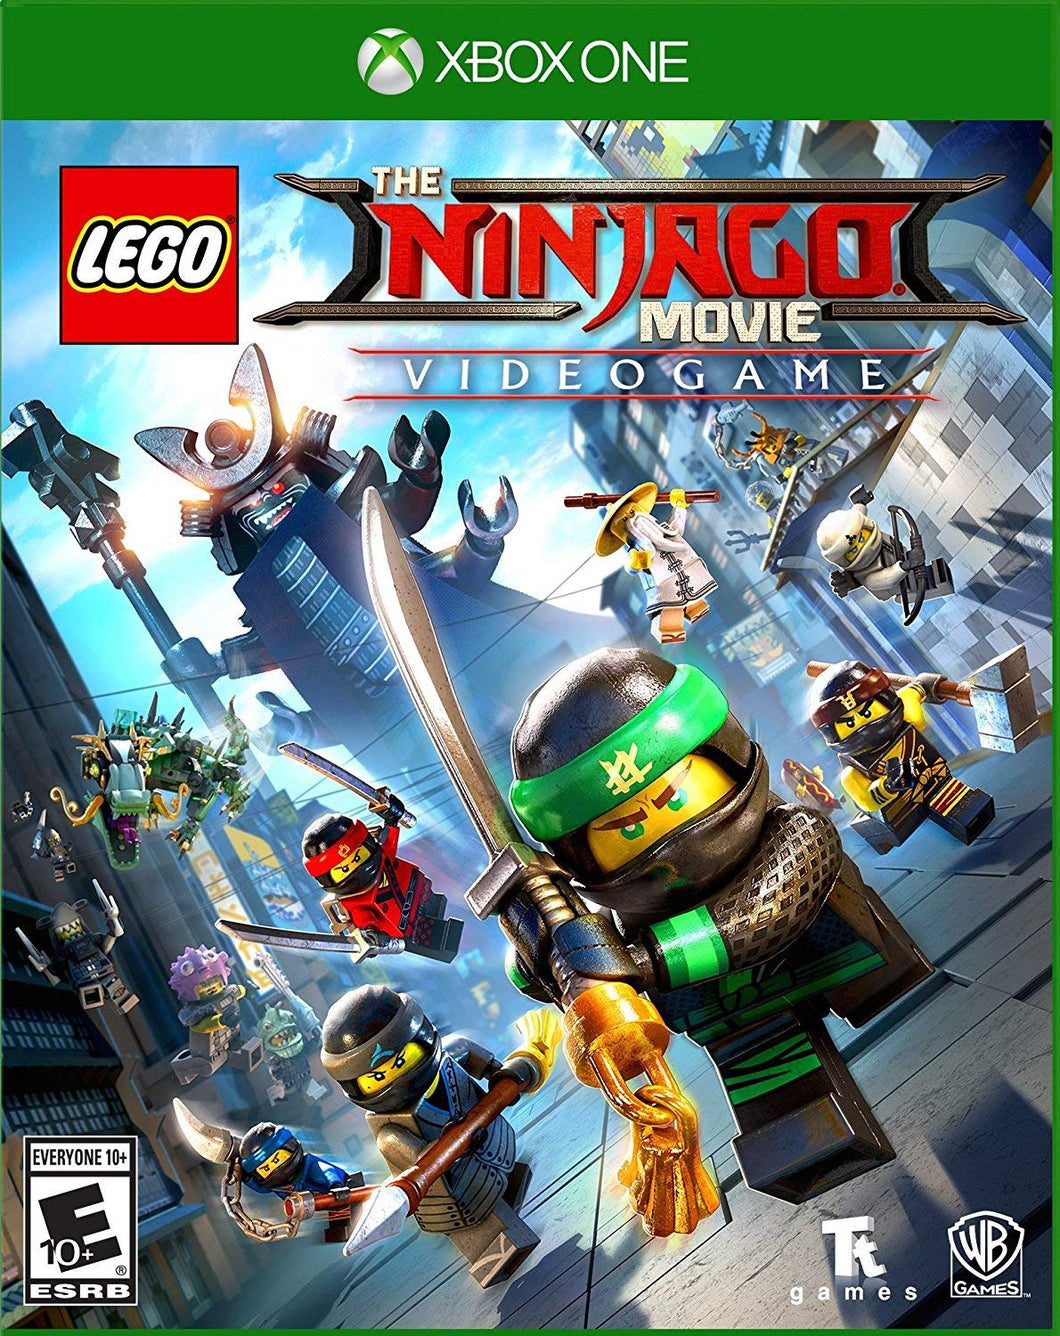 LEGO Ninjago Movie Game XBONE